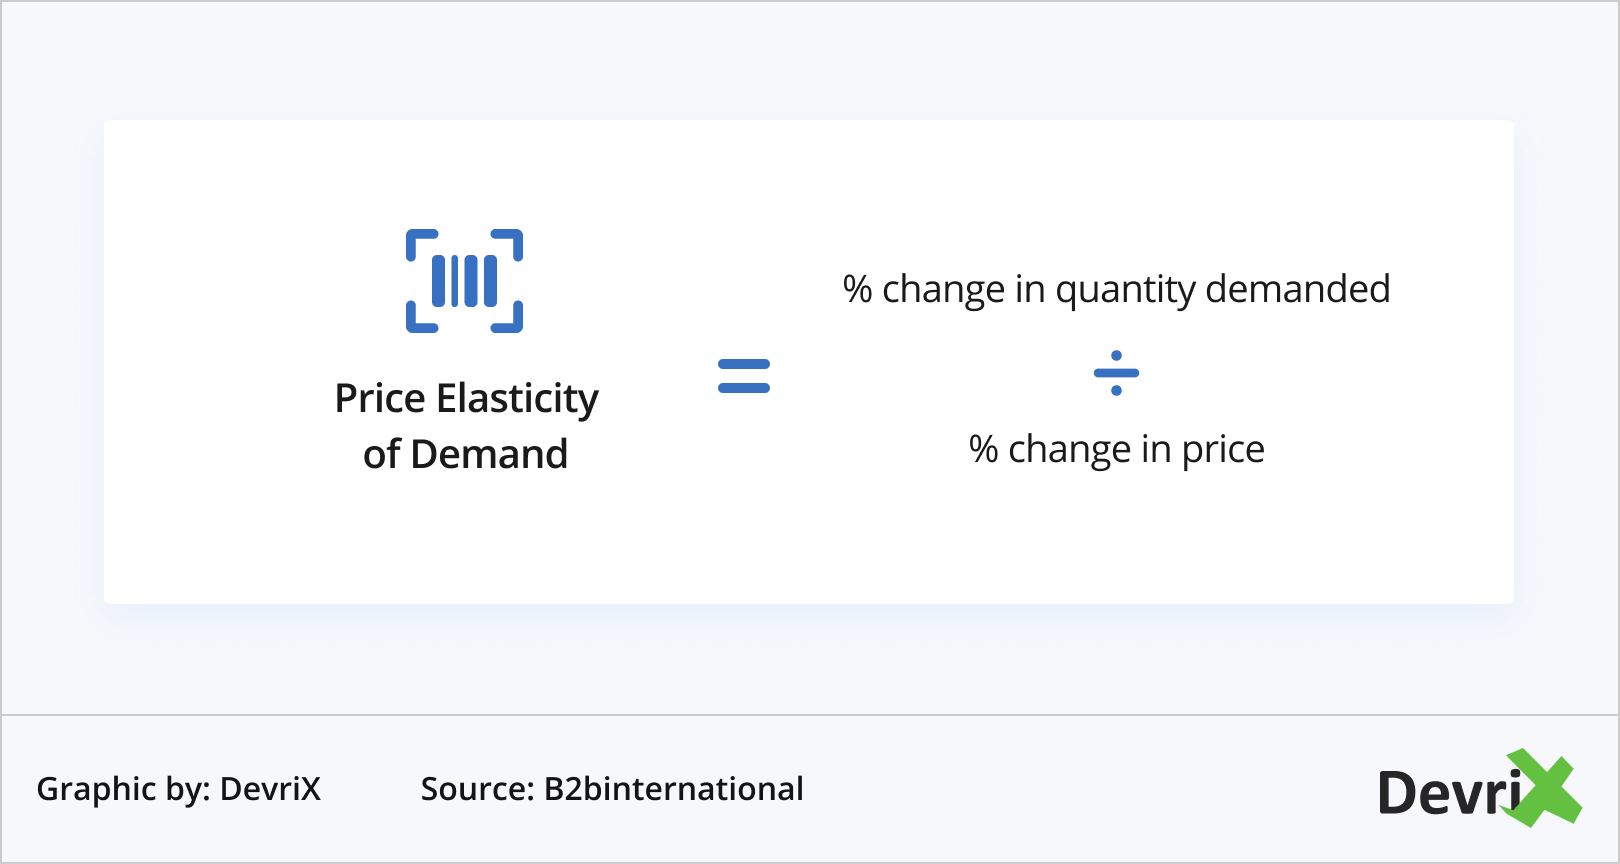 Price Elasticity ratio